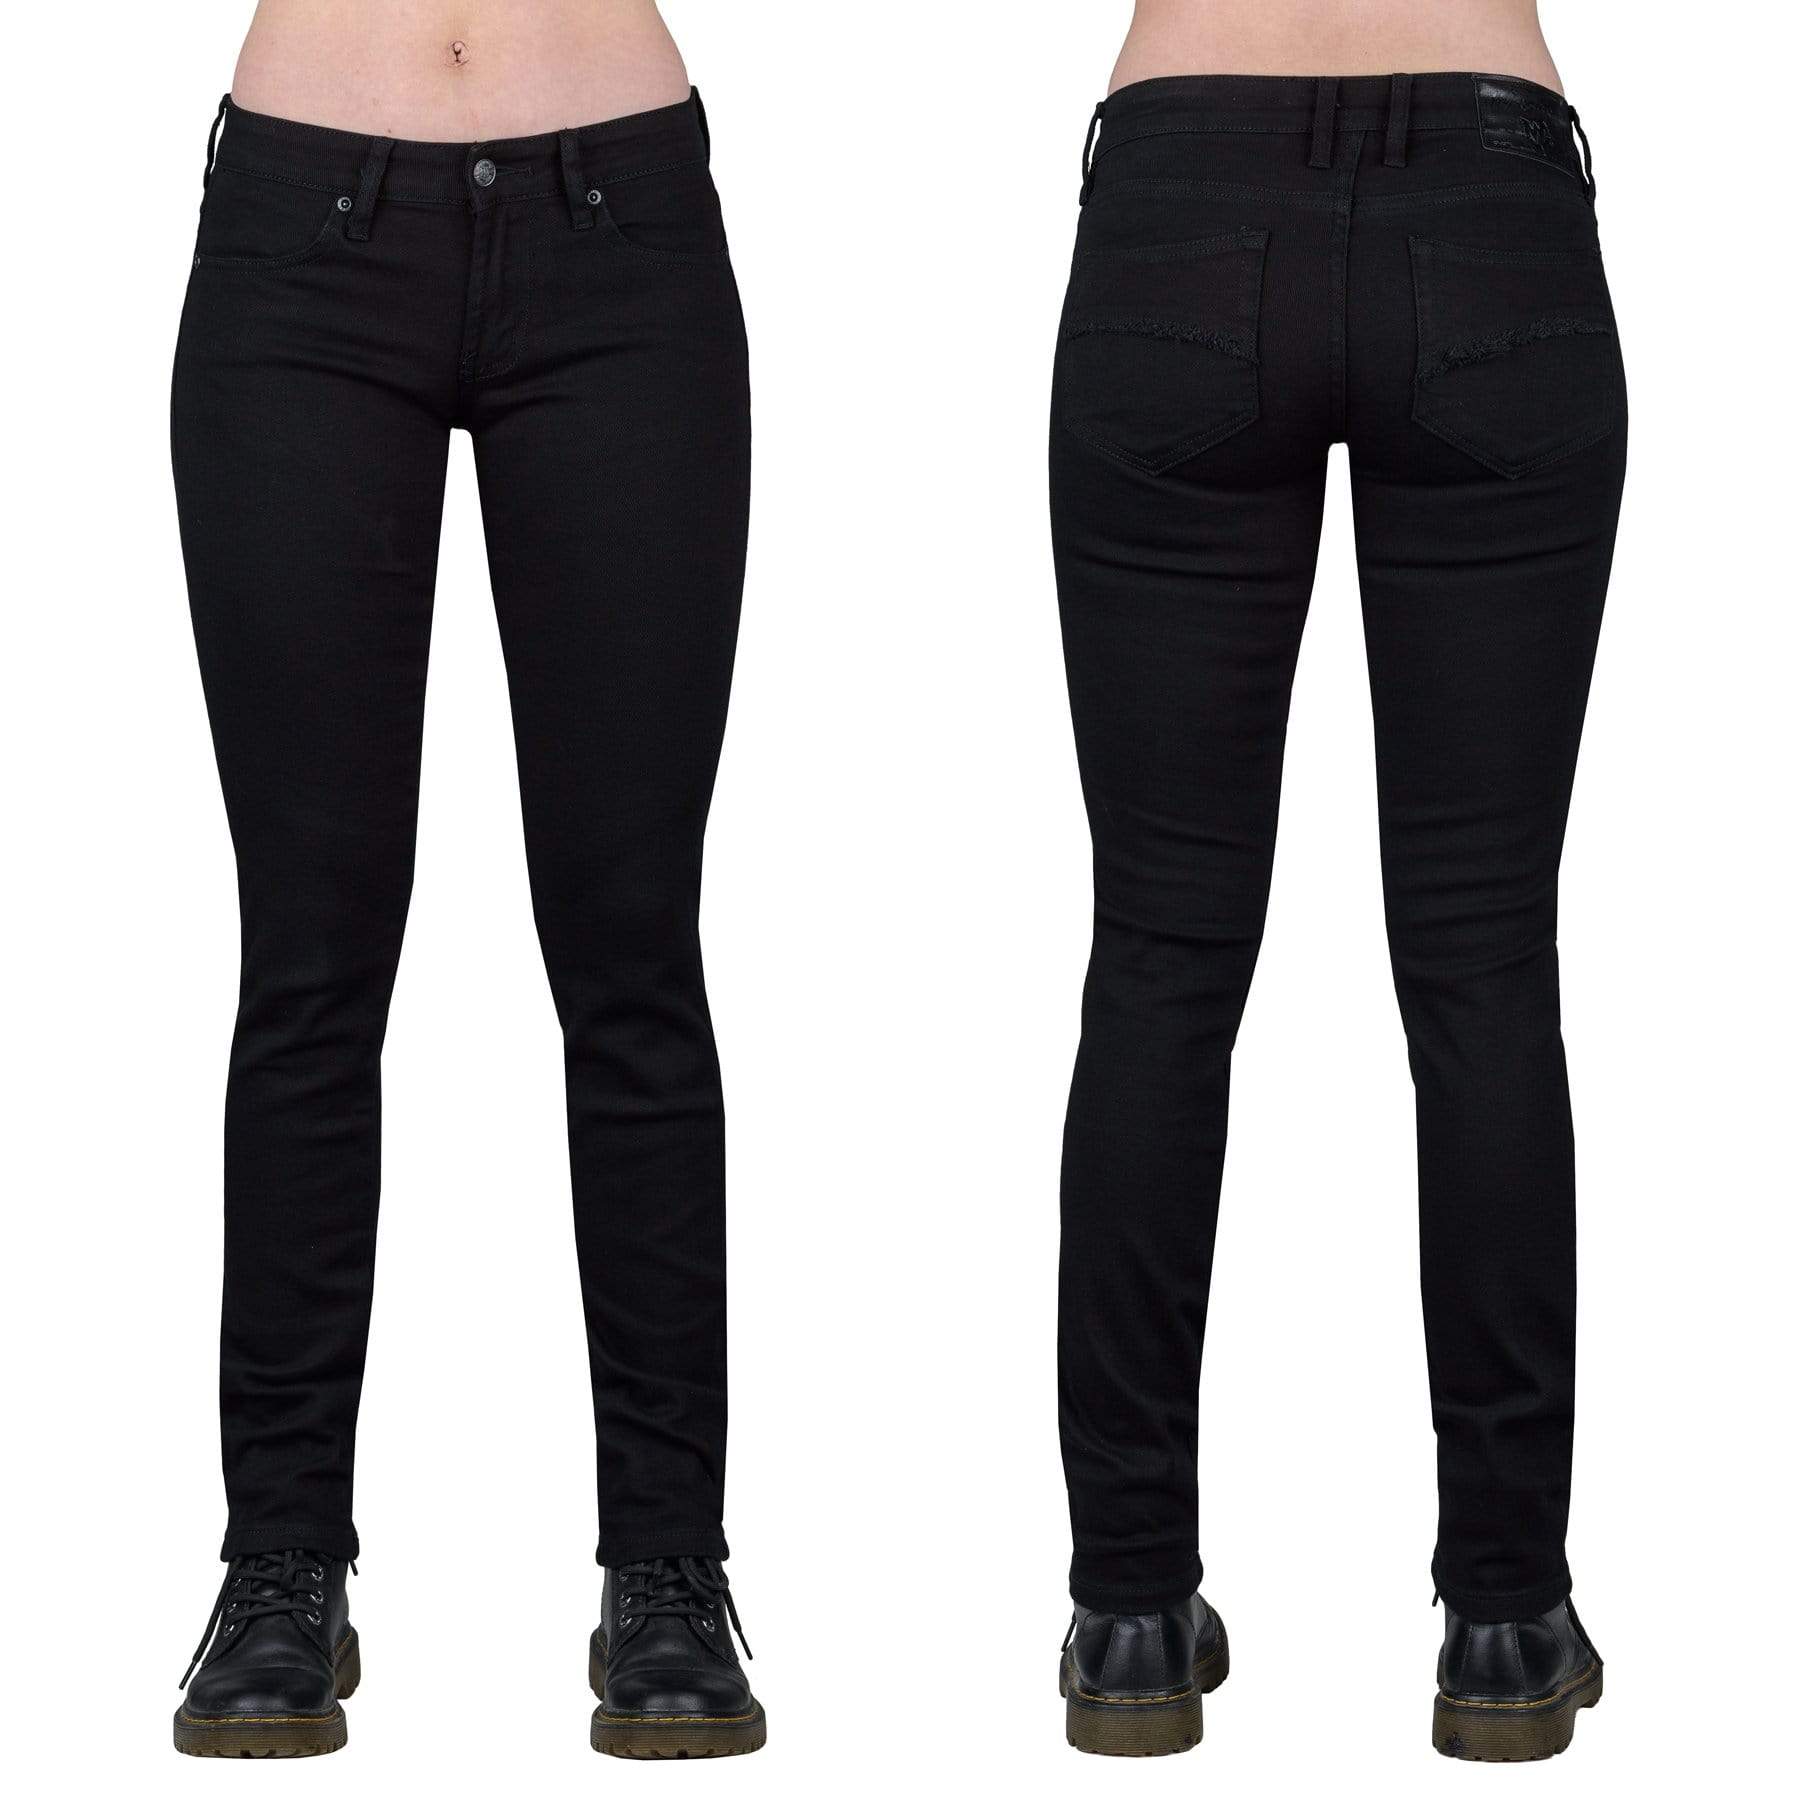 Wornstar Clothing Unisex Jeans. Rampager Denim Jeans - Black